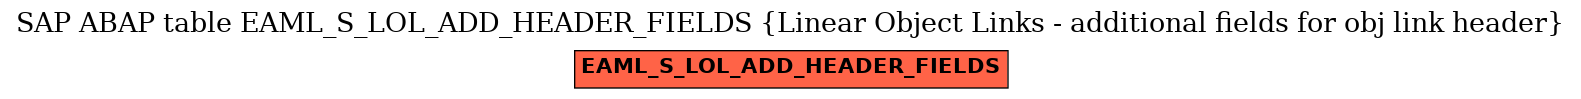 E-R Diagram for table EAML_S_LOL_ADD_HEADER_FIELDS (Linear Object Links - additional fields for obj link header)